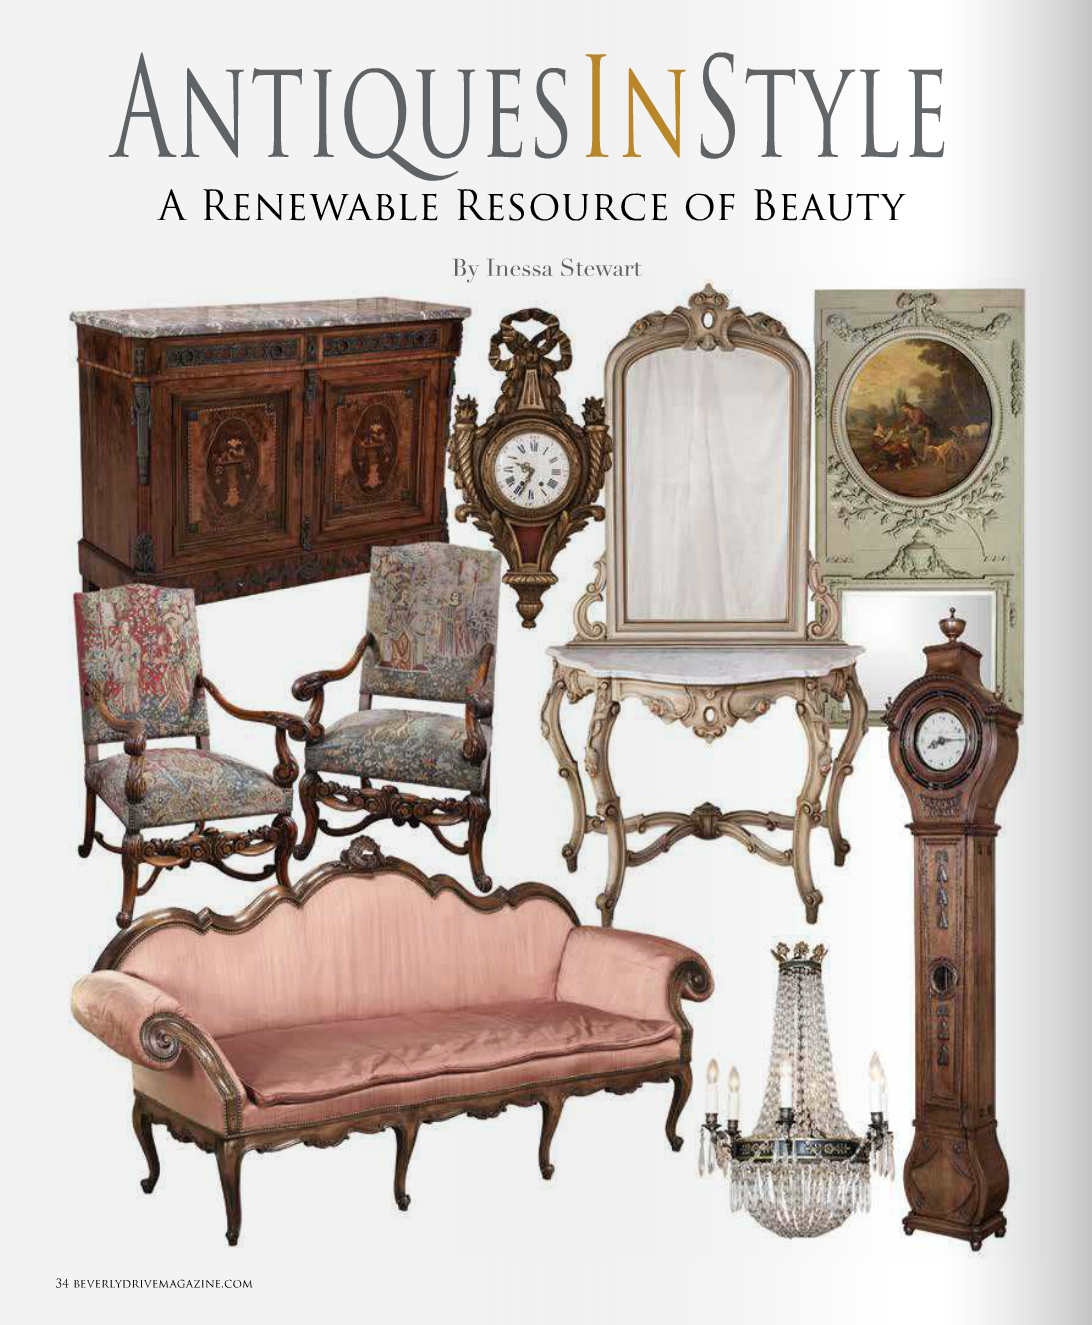 Antiques in Style-antique furniture antique accessories antique art antique mirror antique clock